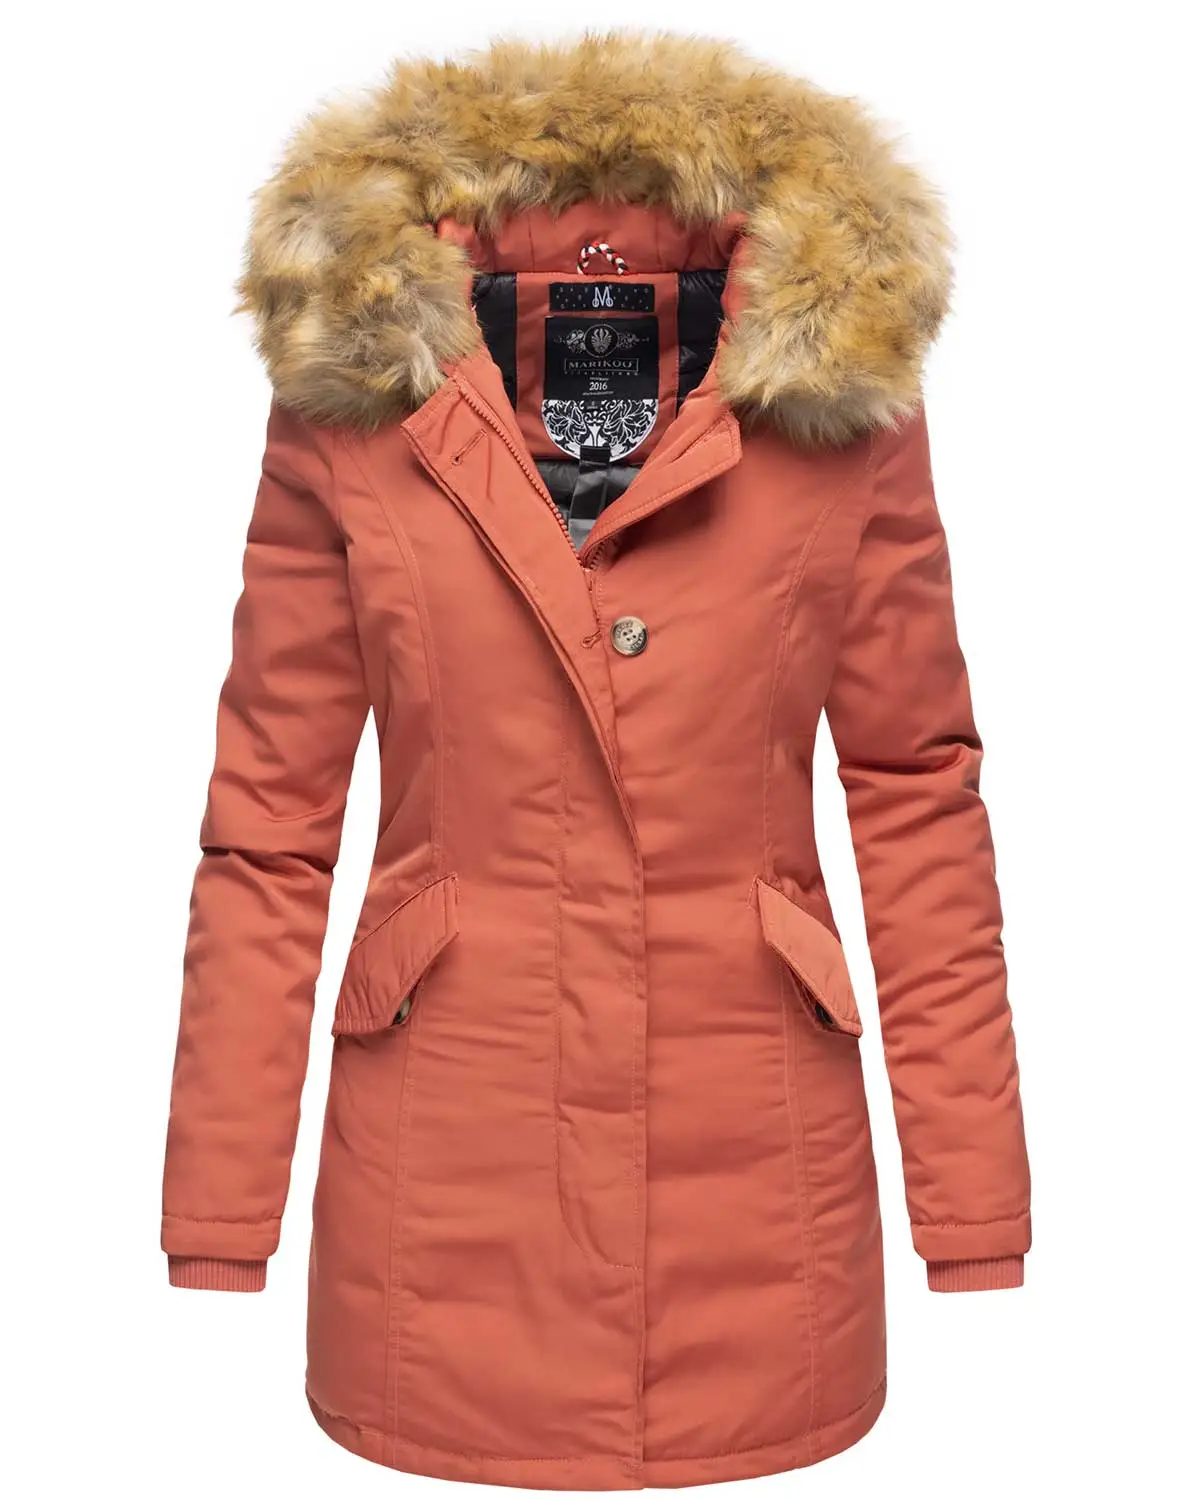 Ladies winter jacket coat coat winter jacket warm lining